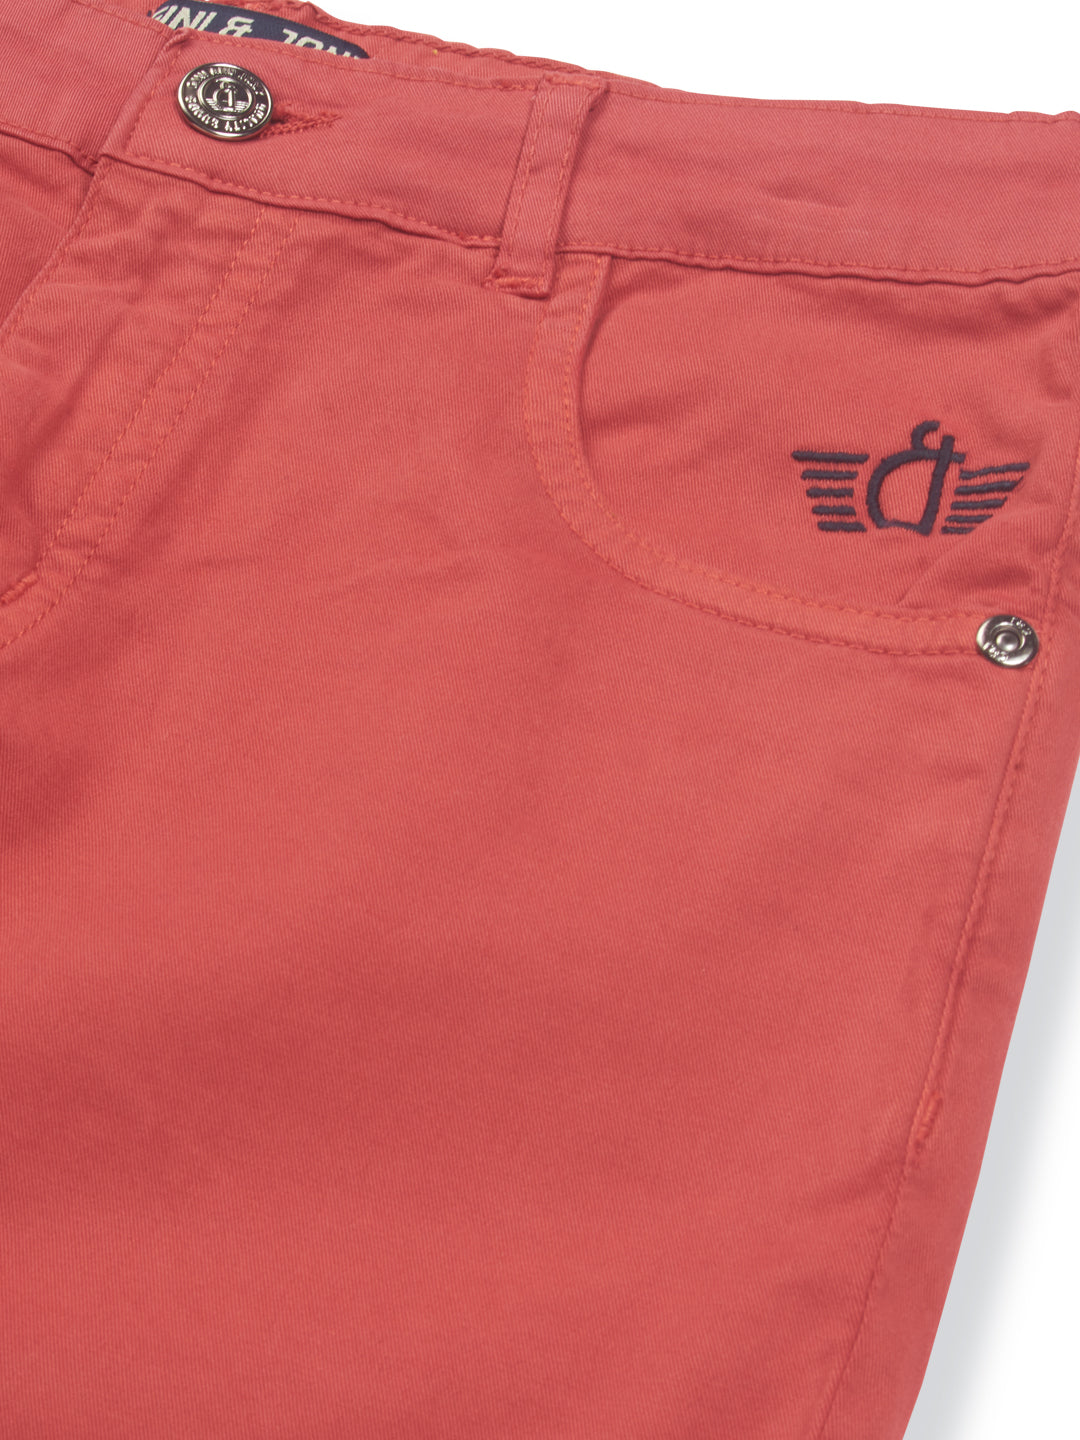 Boys Red Cotton Denim Solid Shorts